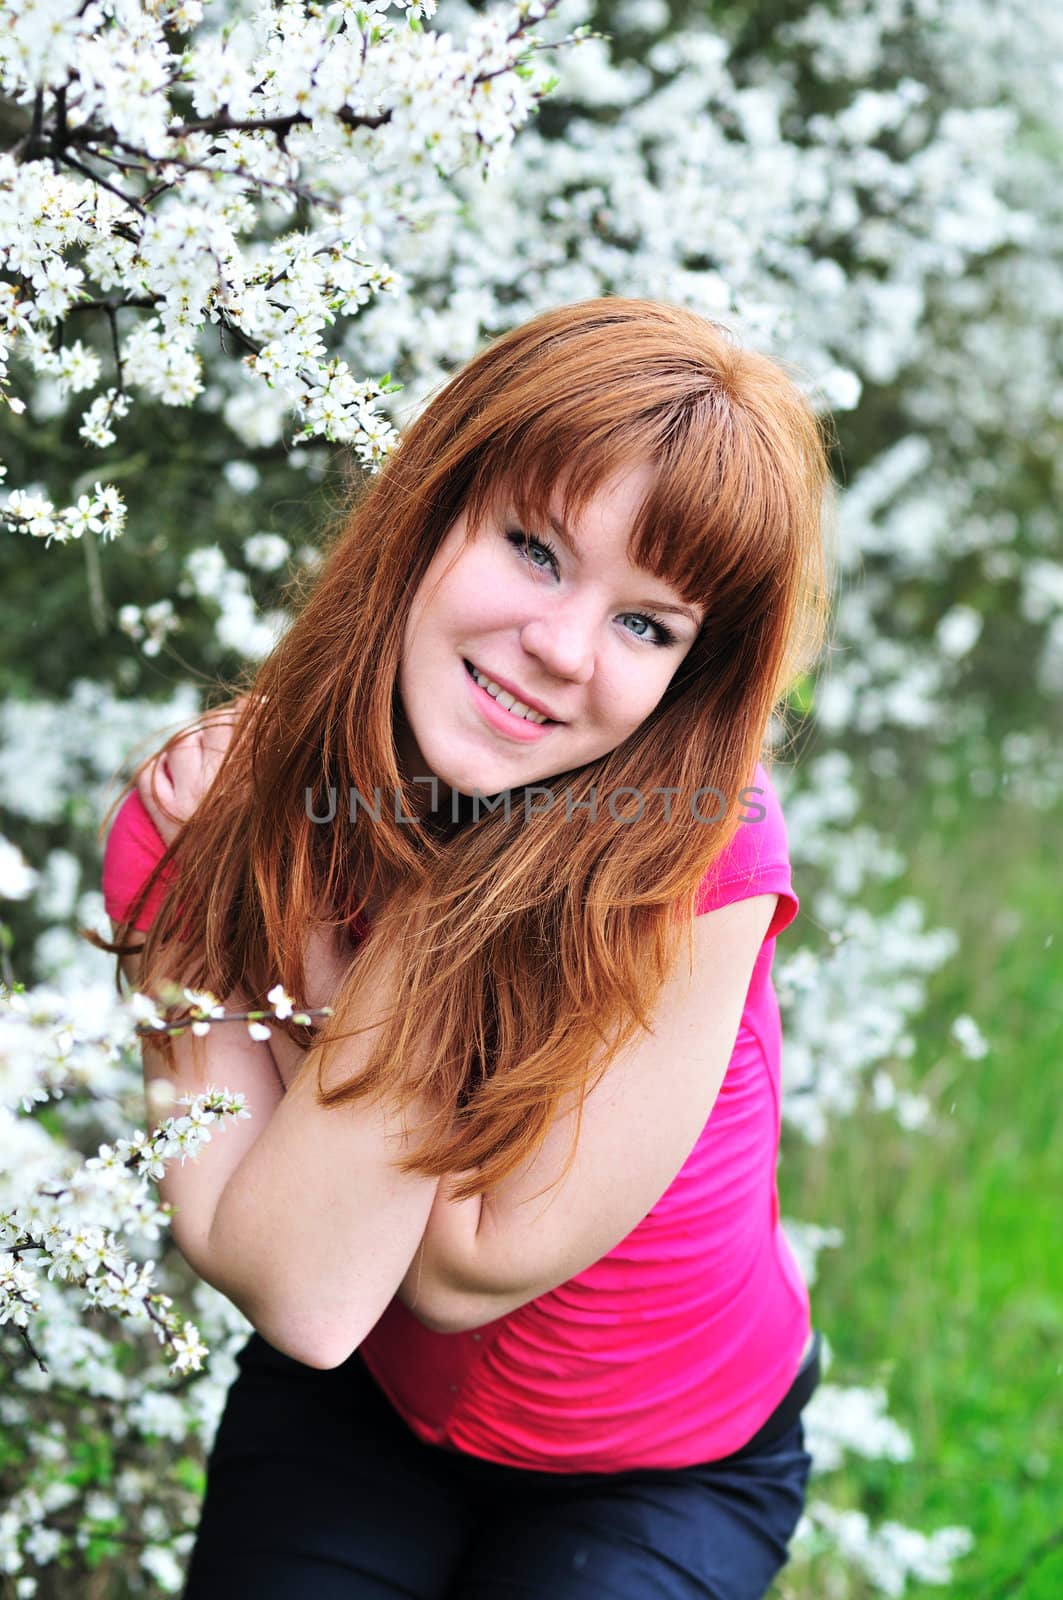 redheaded girl in blossom garden by Reana